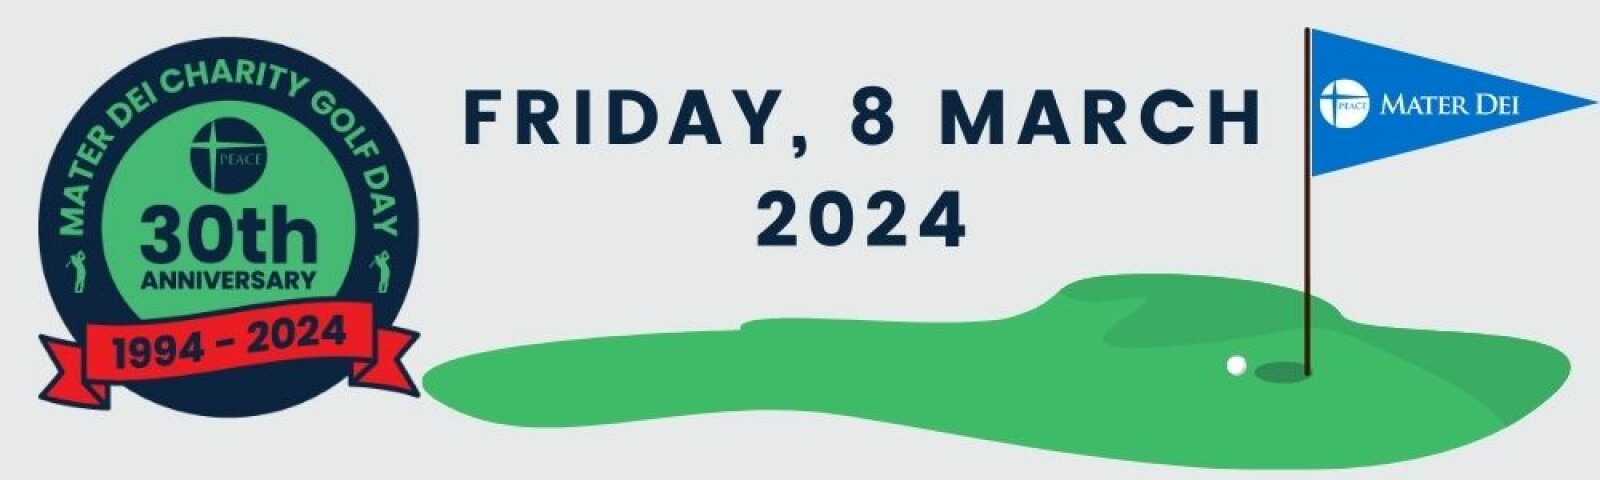 Golf Day 2024 Date